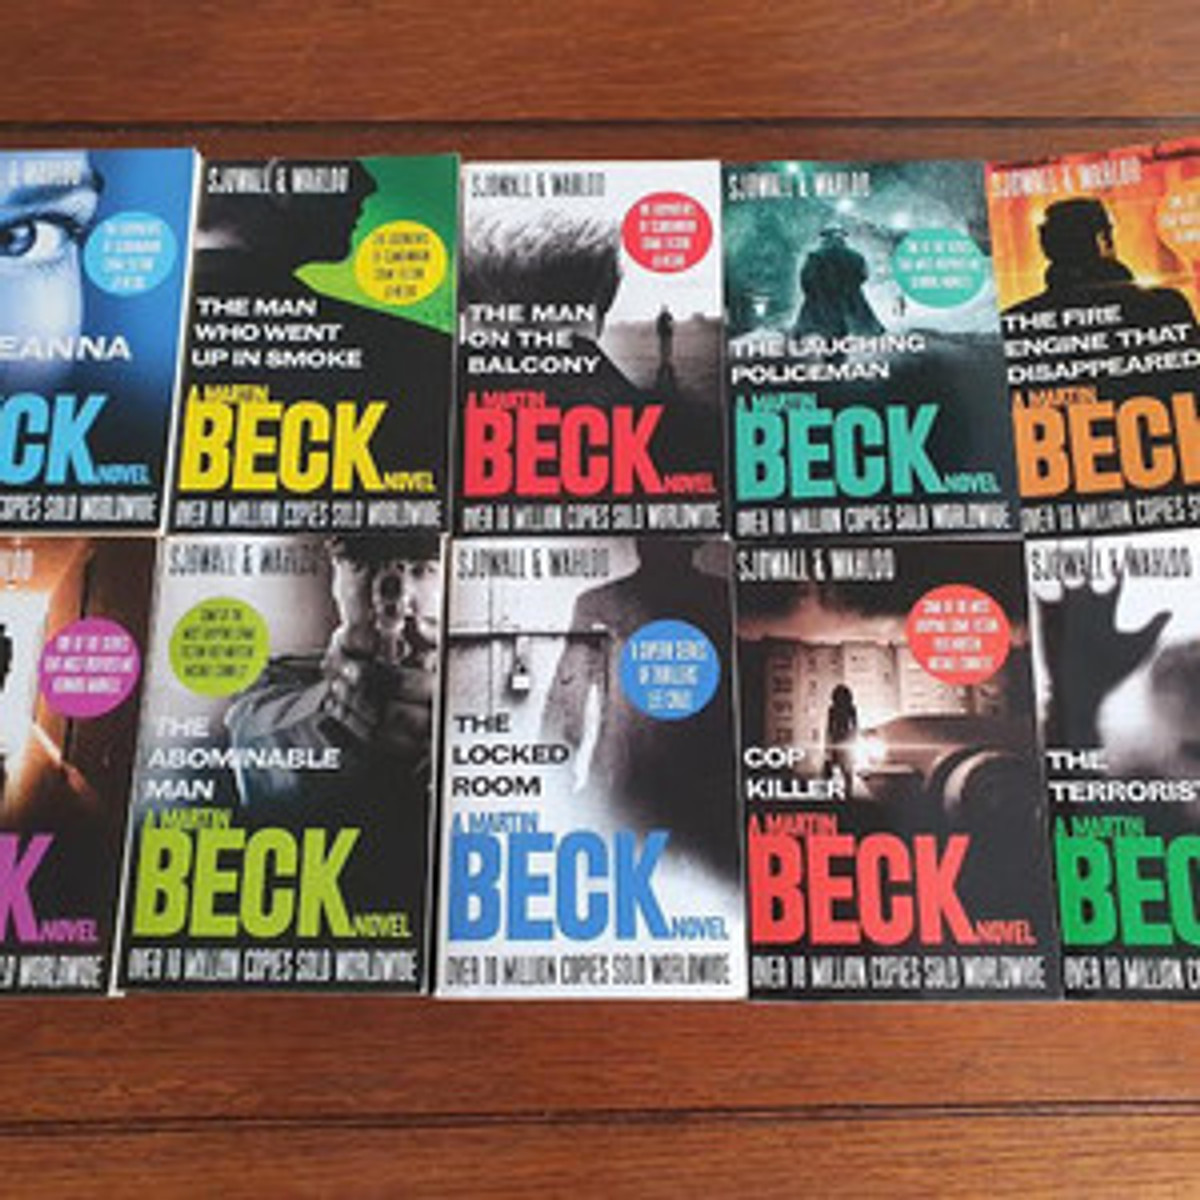 The Martin Beck series